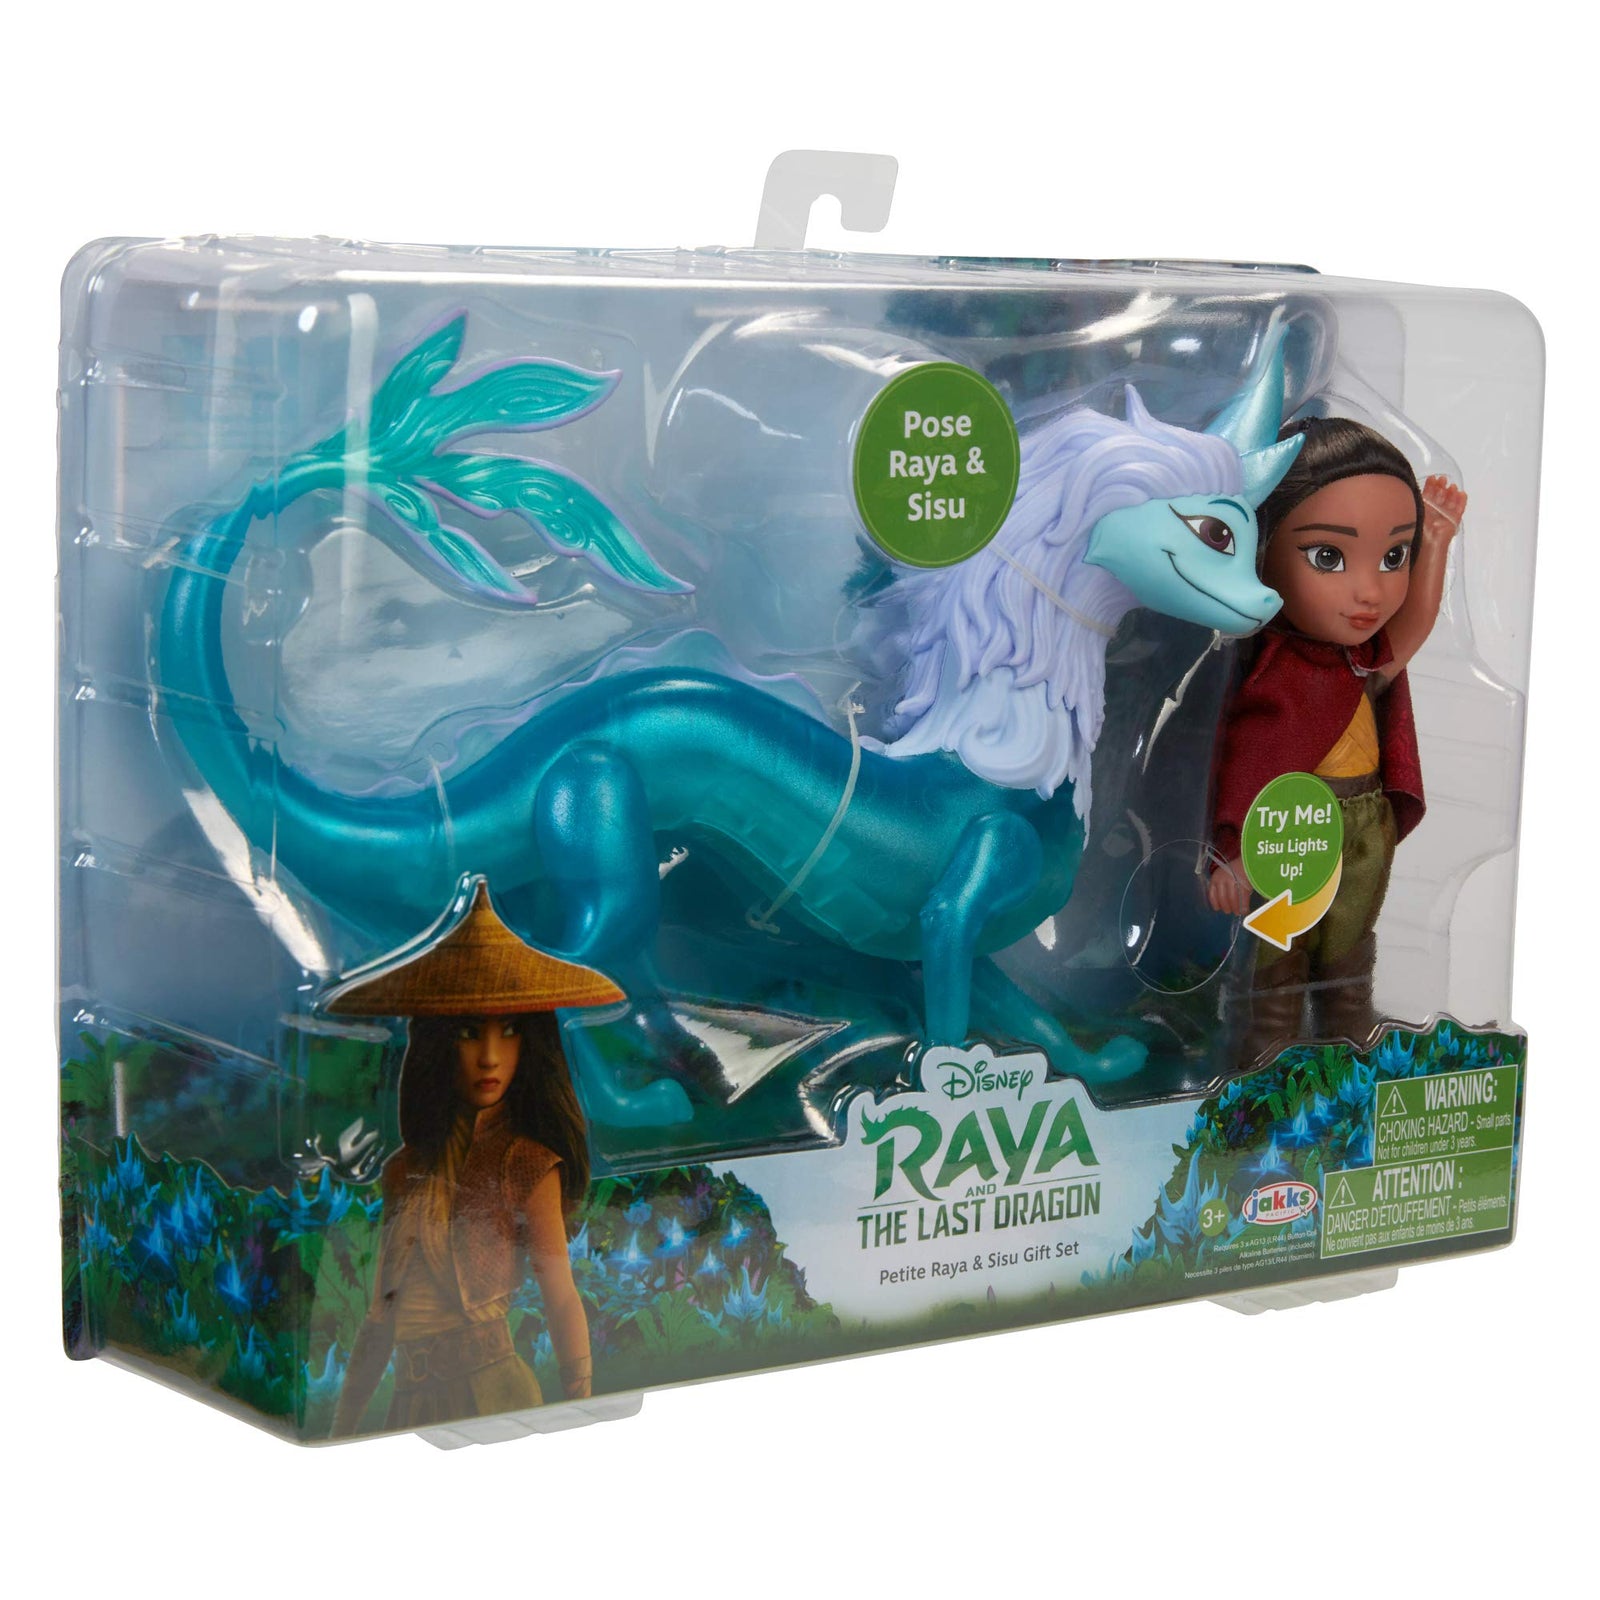 Disney's Raya and the Last Dragon 6-Inch Petite Raya Doll and Feature Sisu Dragon Figure Gift Set, 6 inches